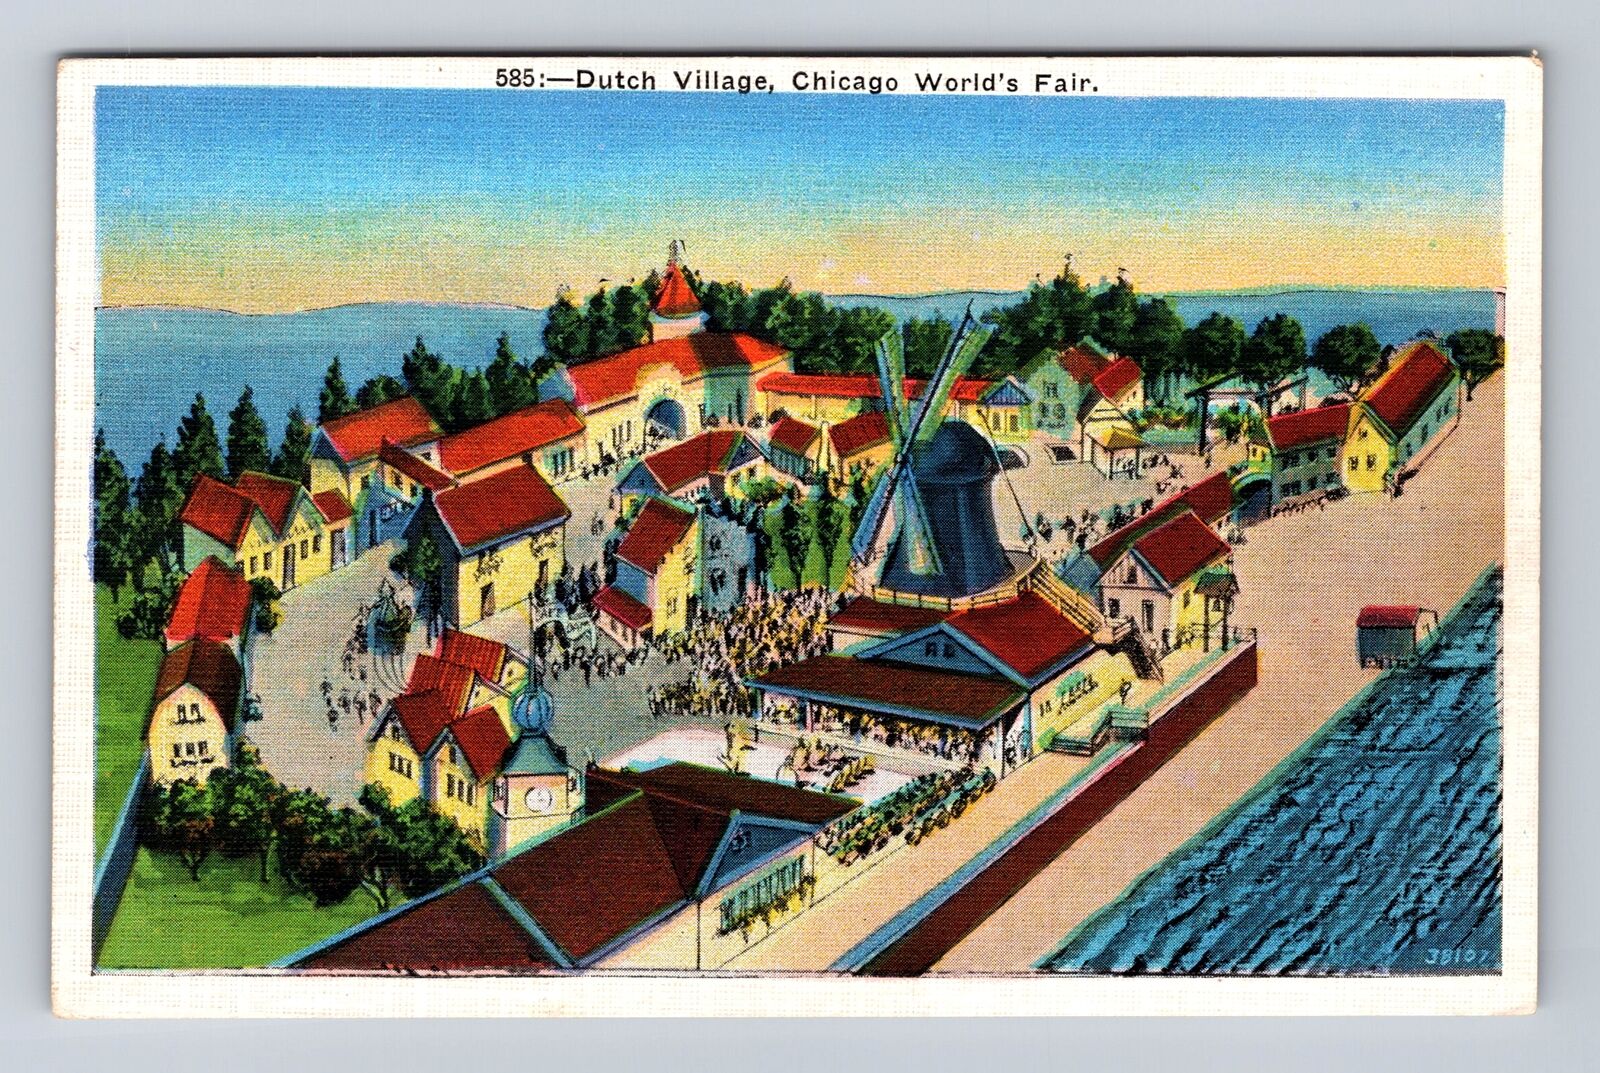 Chicago IL-Illinois, Worlds Fair, Dutch Village Exhibit, Vintage Postcard